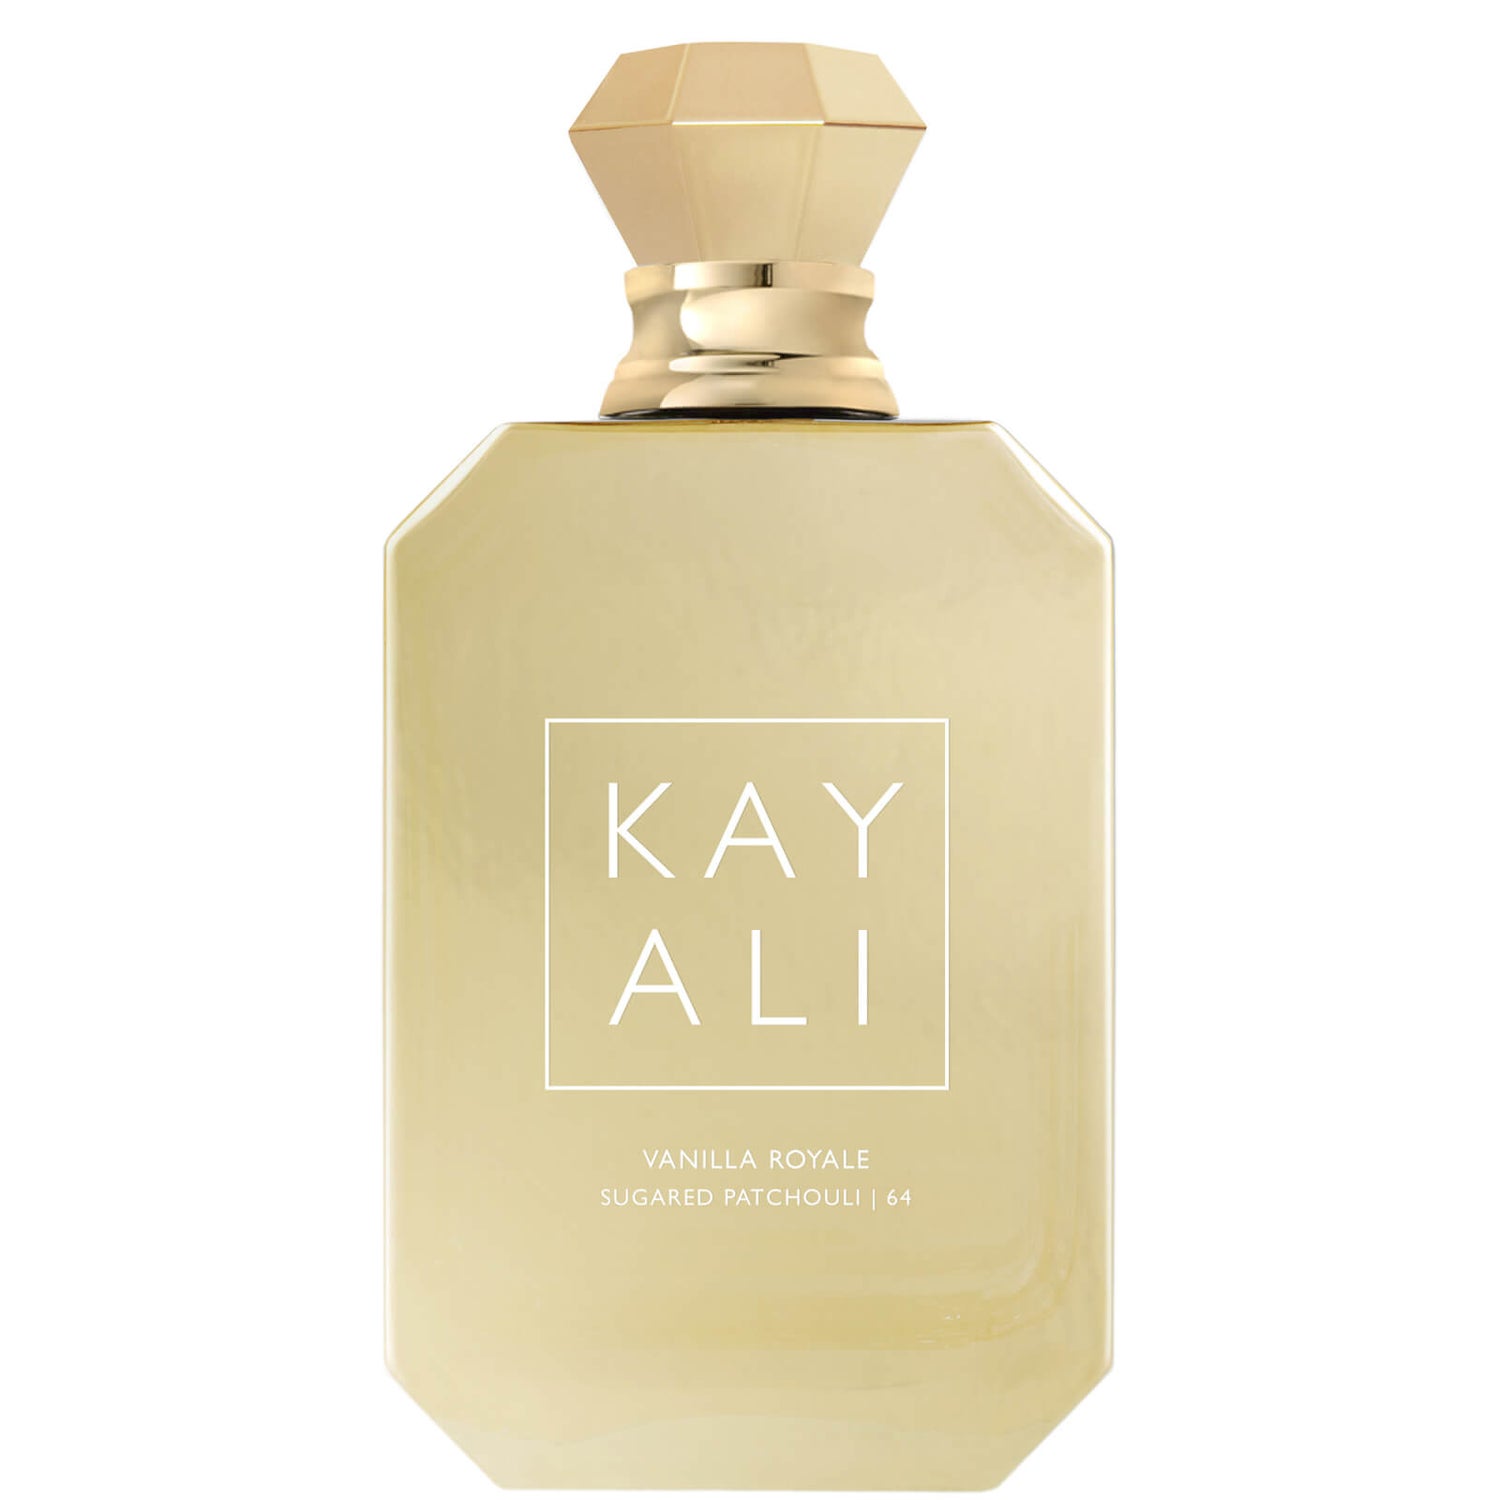 KAYALI Vanilla Royale Sugared Patchouli 64 Eau de Parfum Intense - 100ml